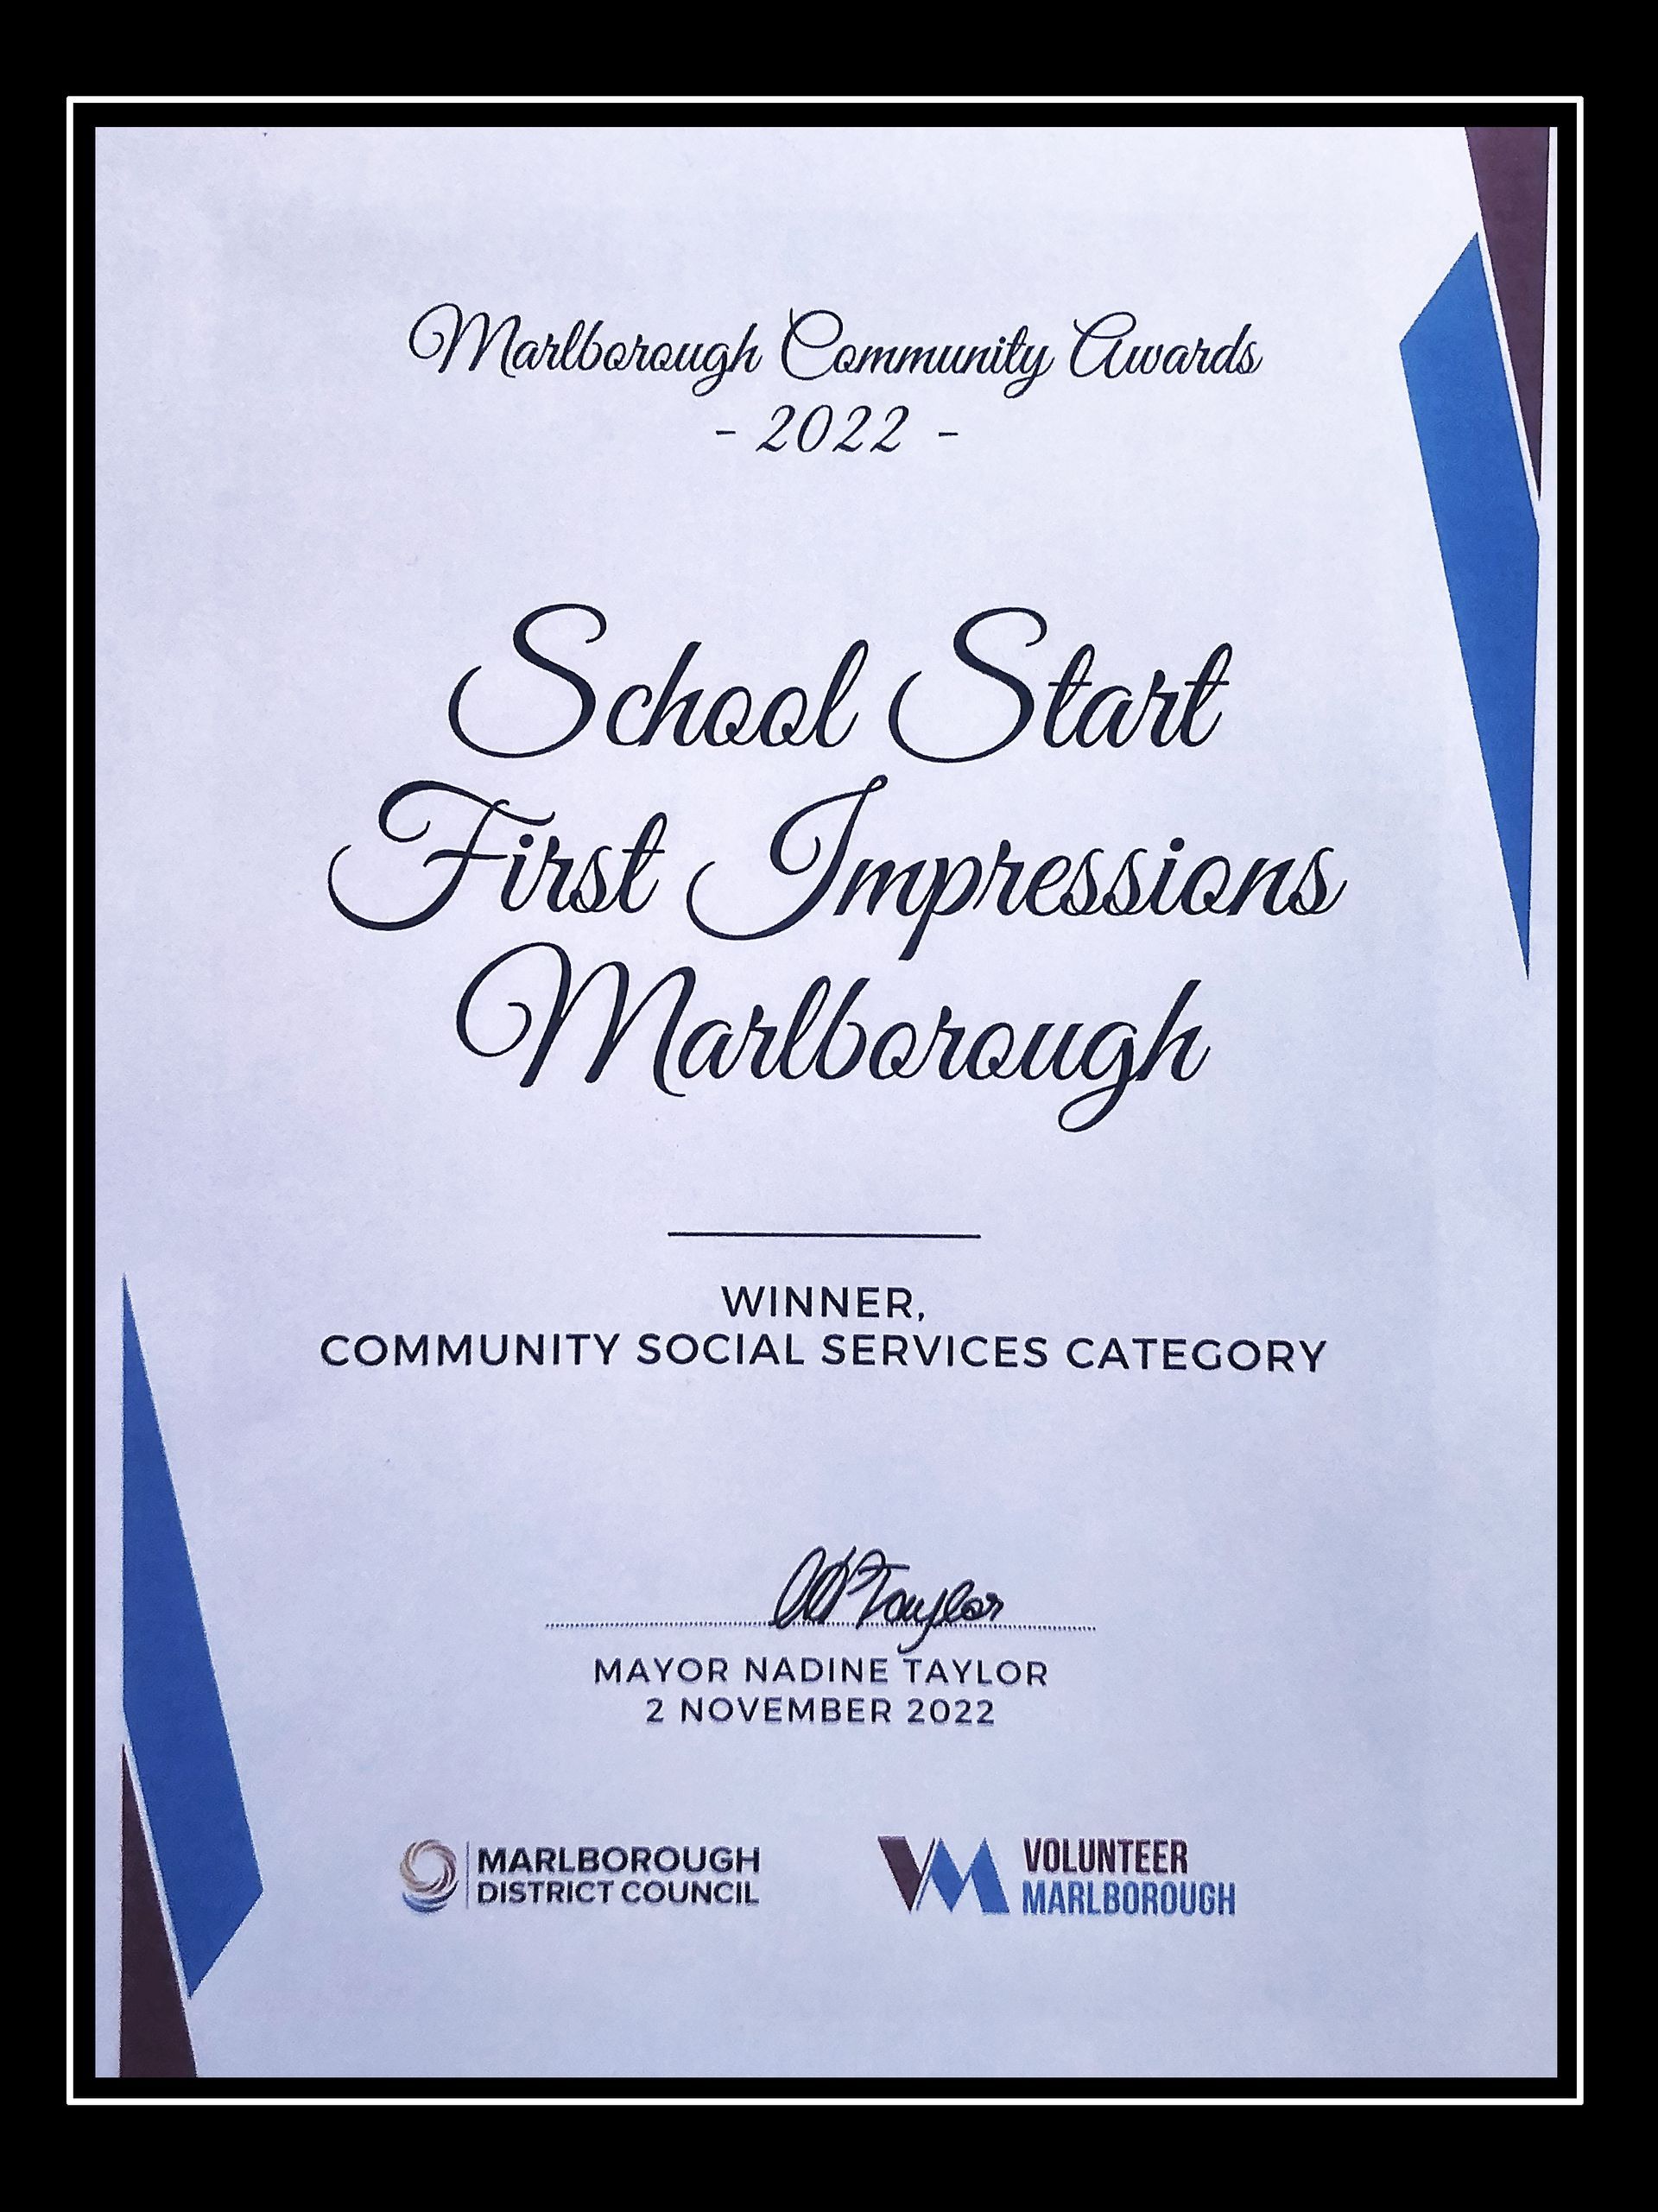 School Start First Impressions Marlborough Winner of the Marlborough Community Award in 2022 for Community Social Services